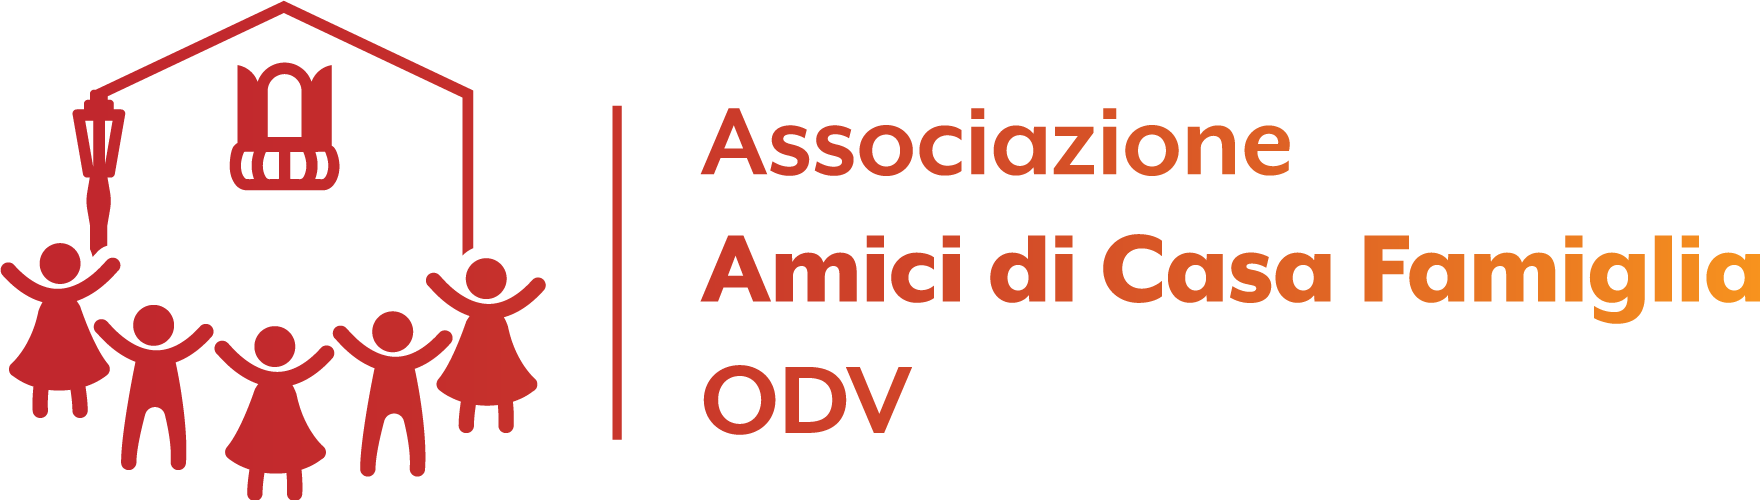 Associazione Amici di Casa Famiglia ODV